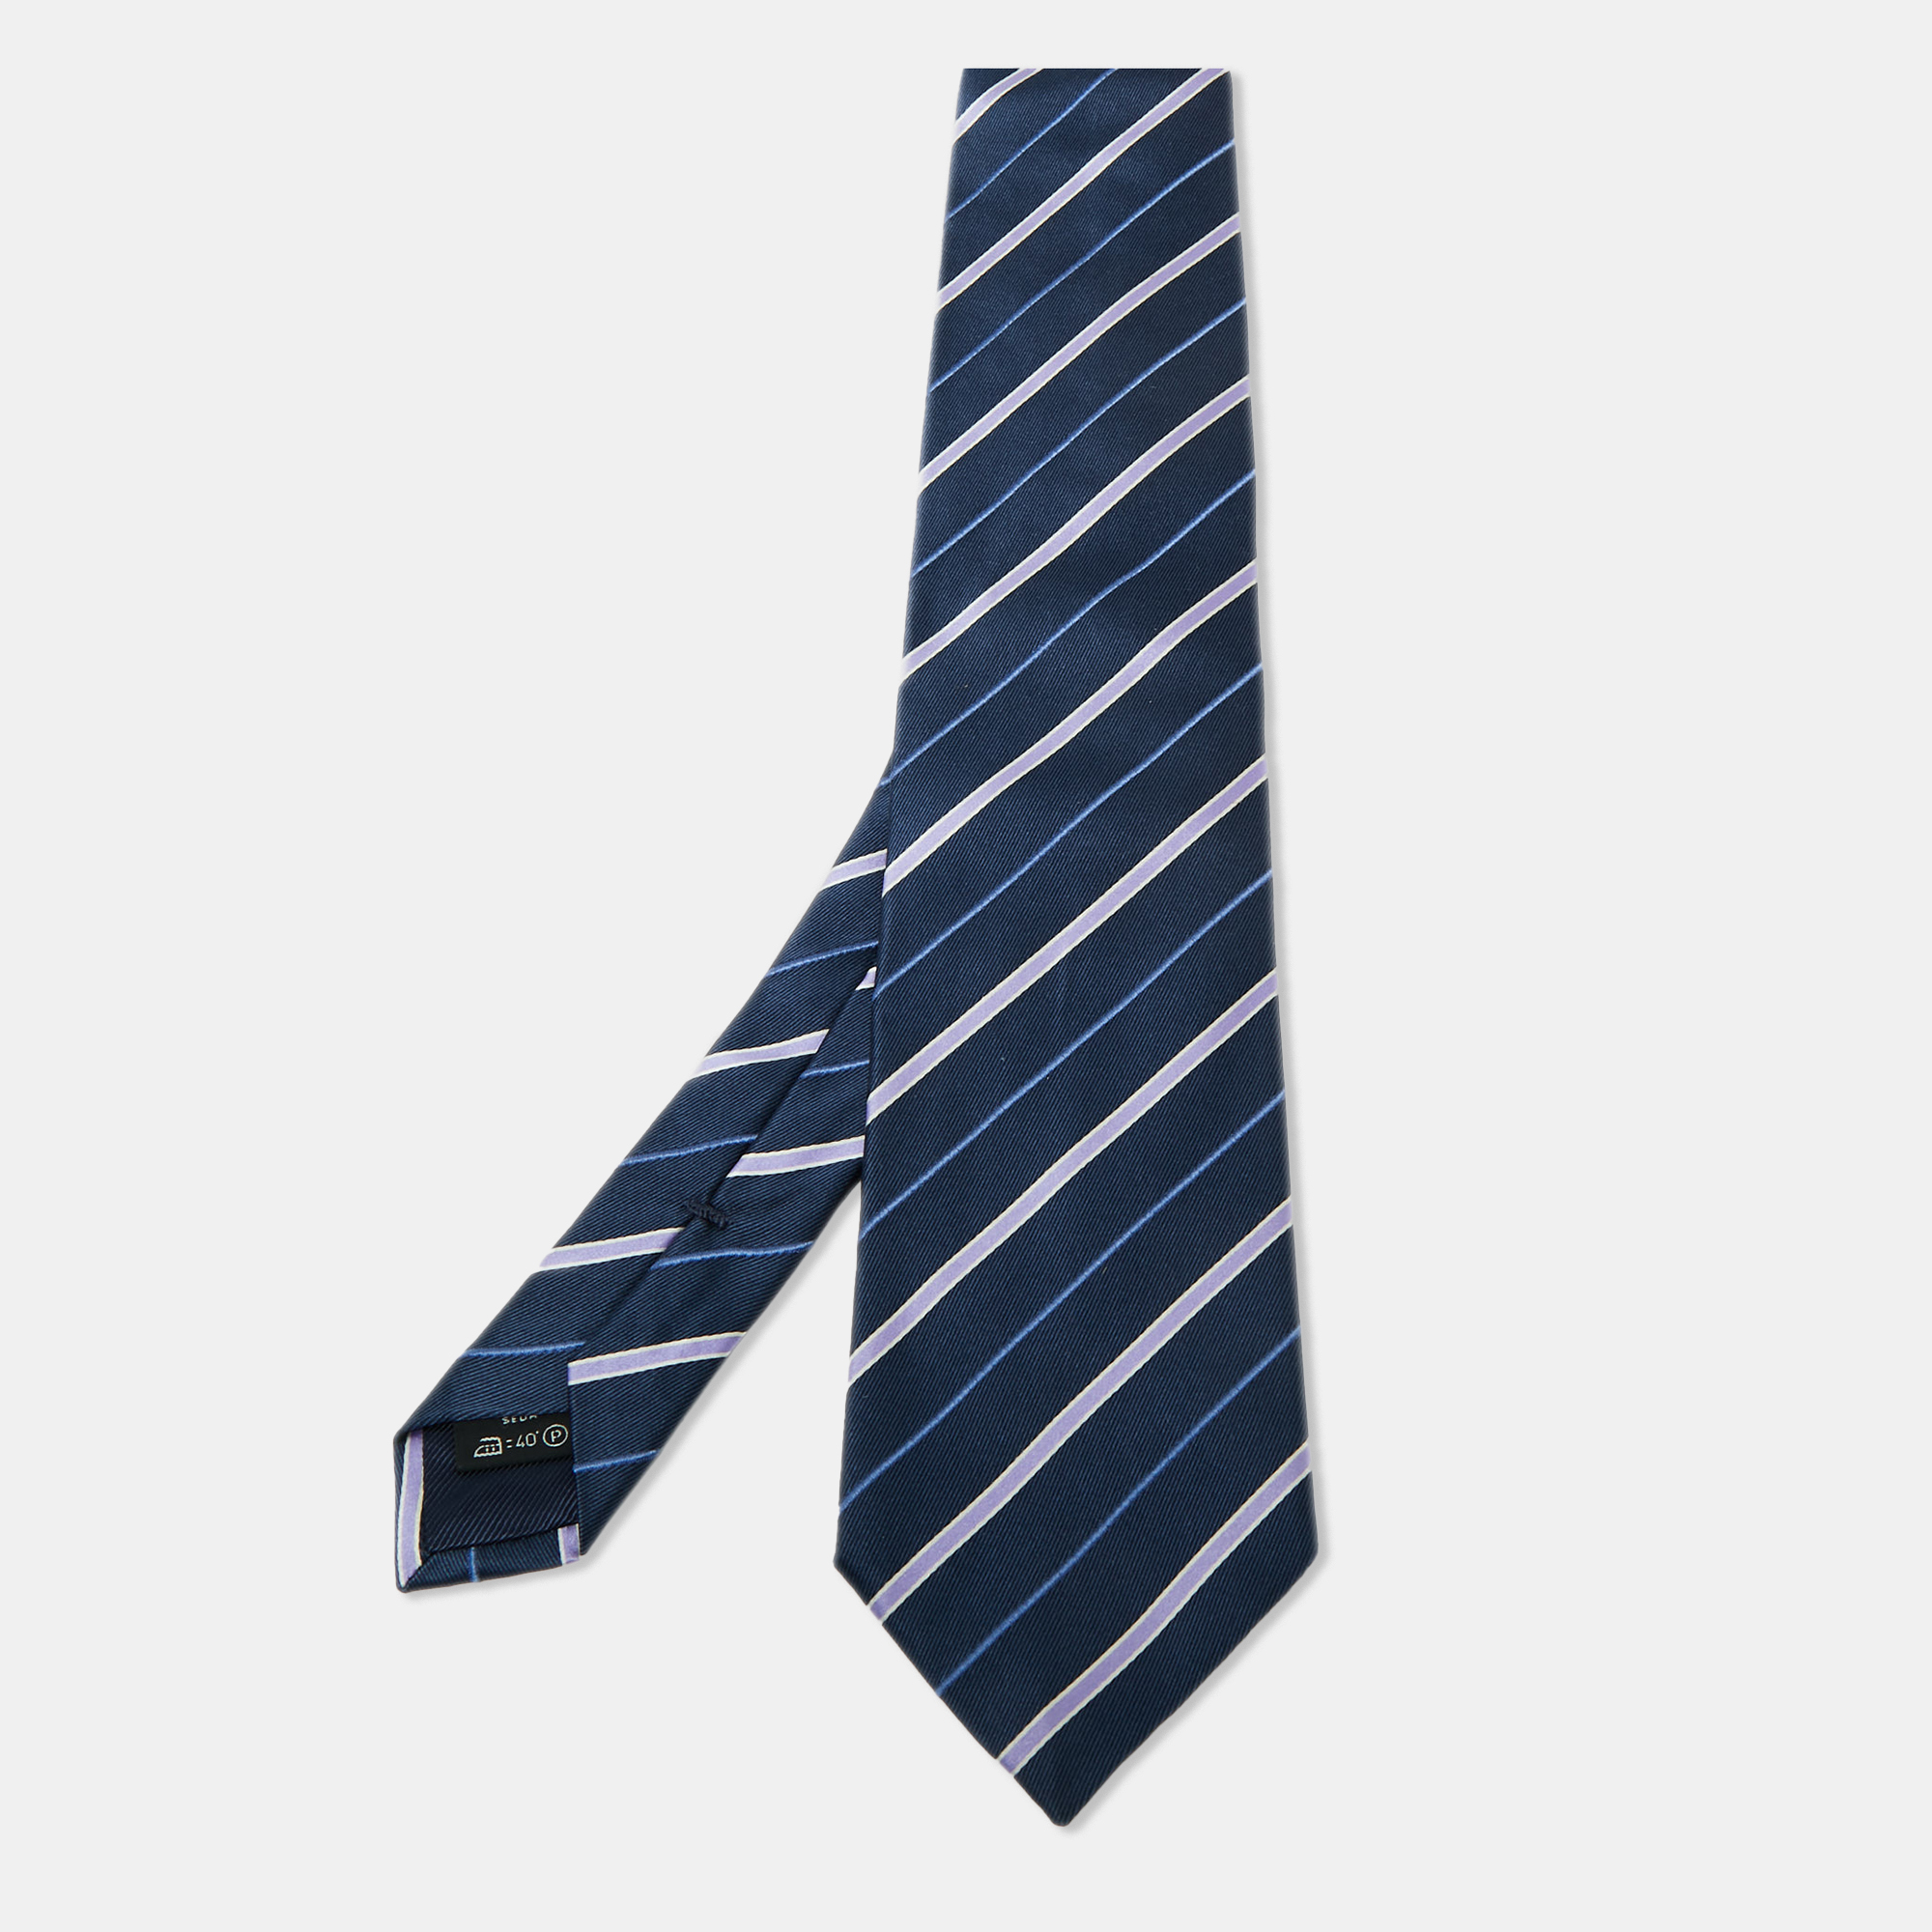 Ermenegildo Zegna Blue Striped Silk Tie